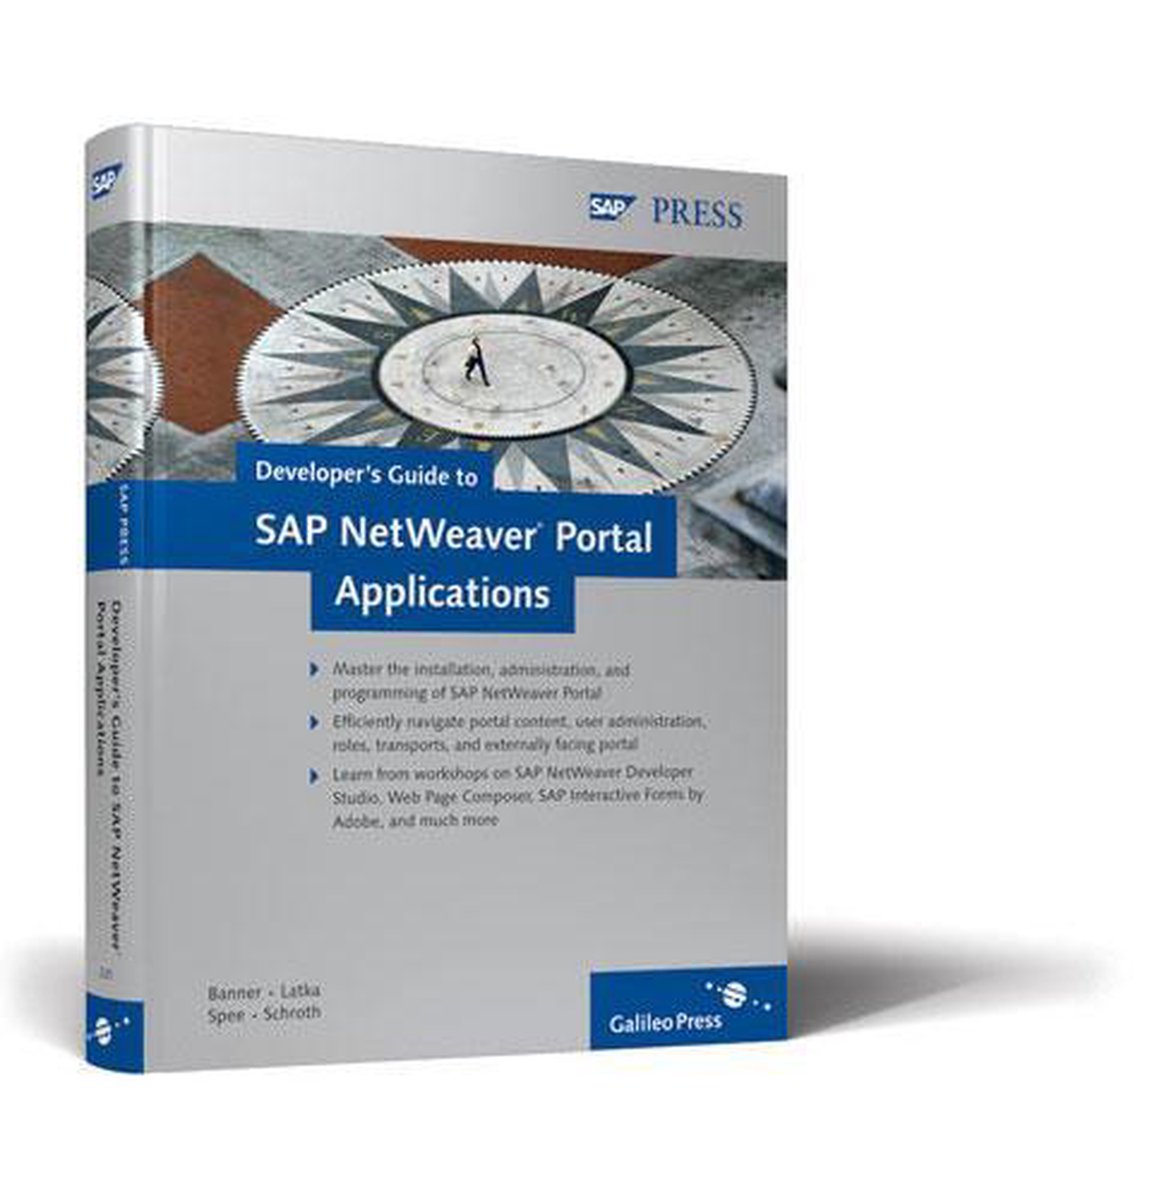 Developer's Guide to SAP NetWeaver Portal Applications